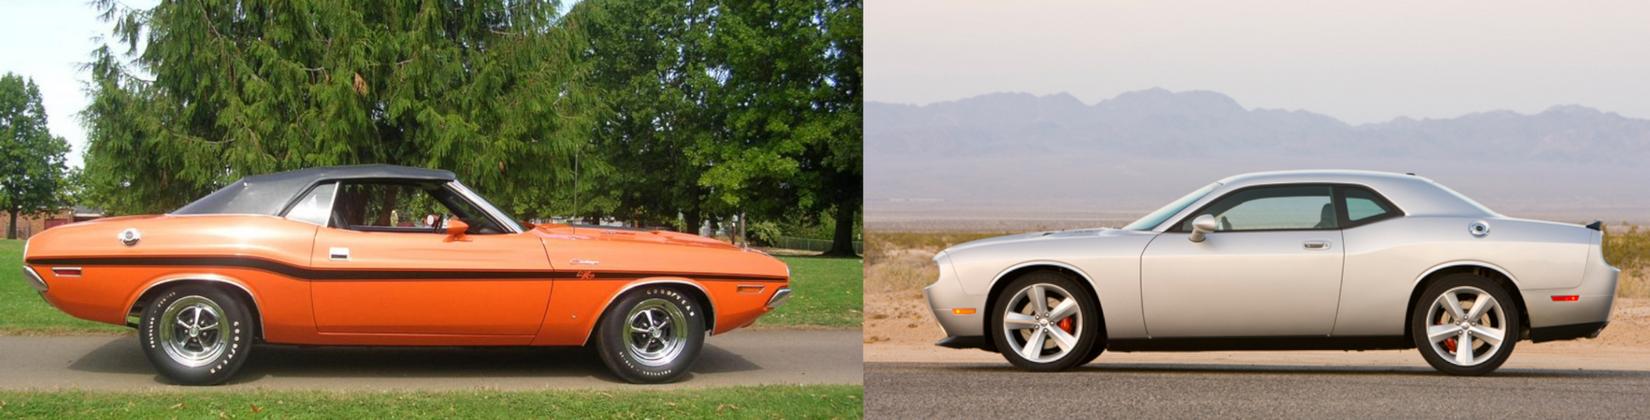 1970 Dodge Challenger & 2008 Dodge Challenger